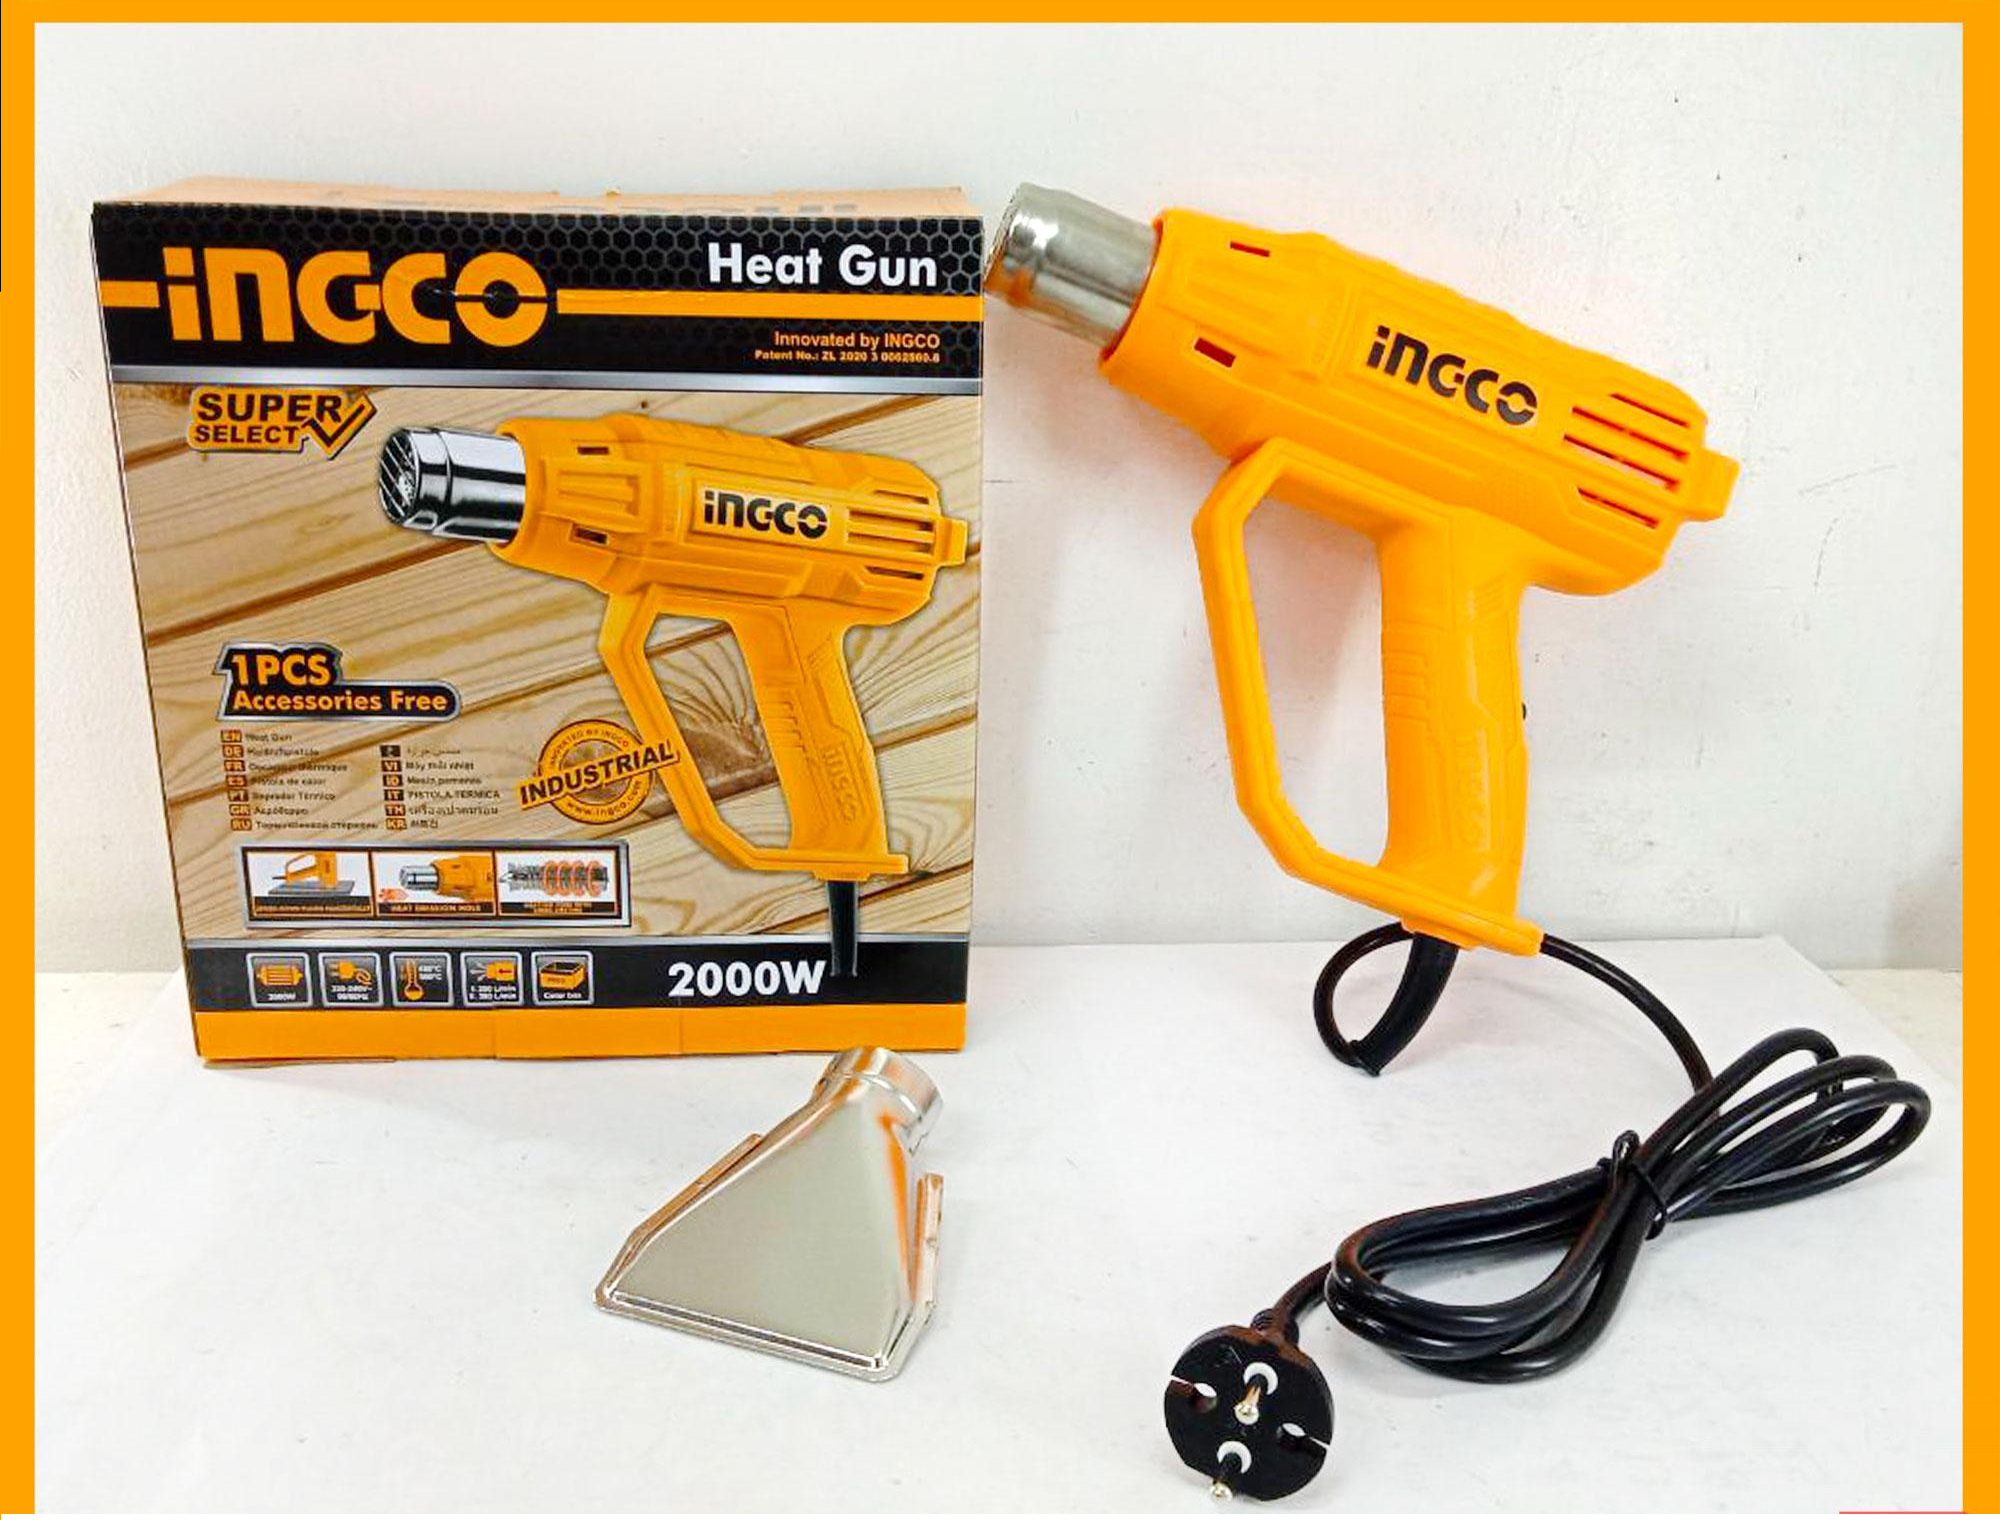 Heat Gun INGCO 2000w